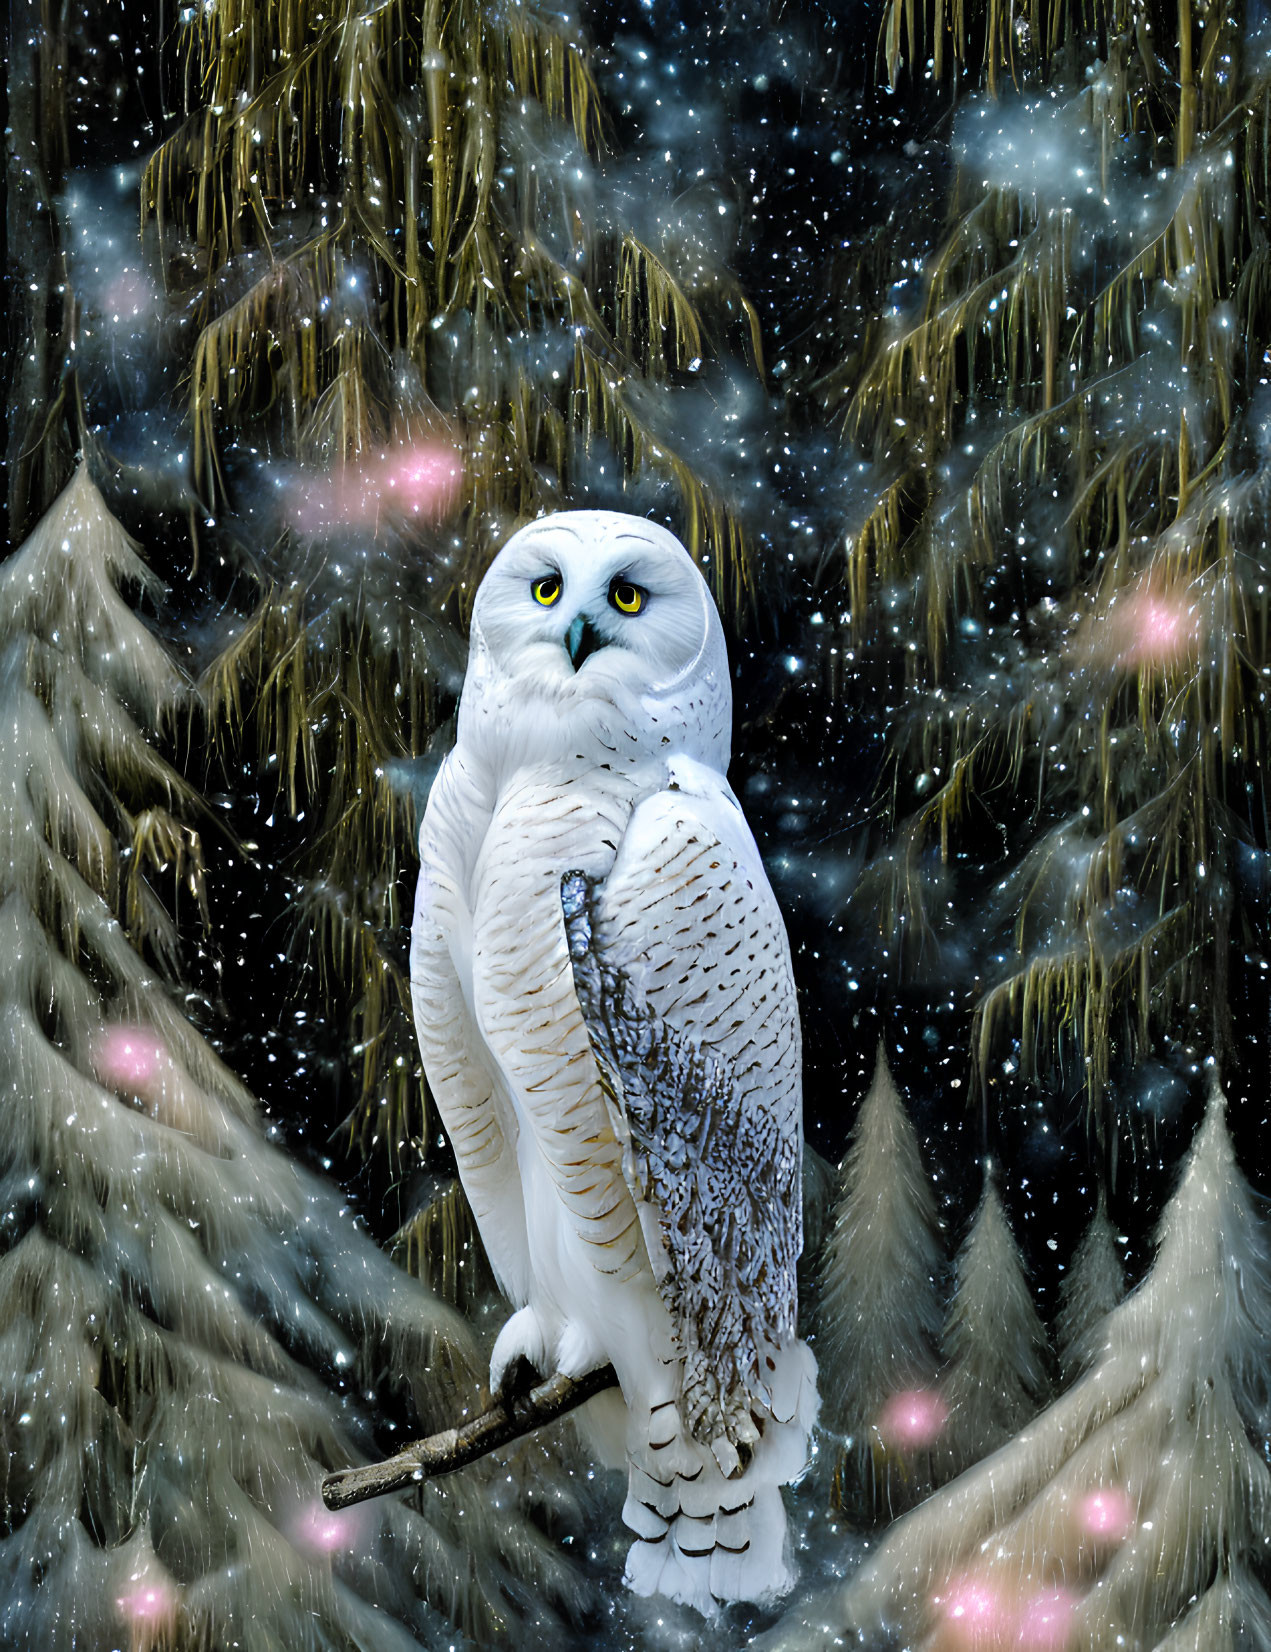 Snowy owl perched on branch in snowy night scene